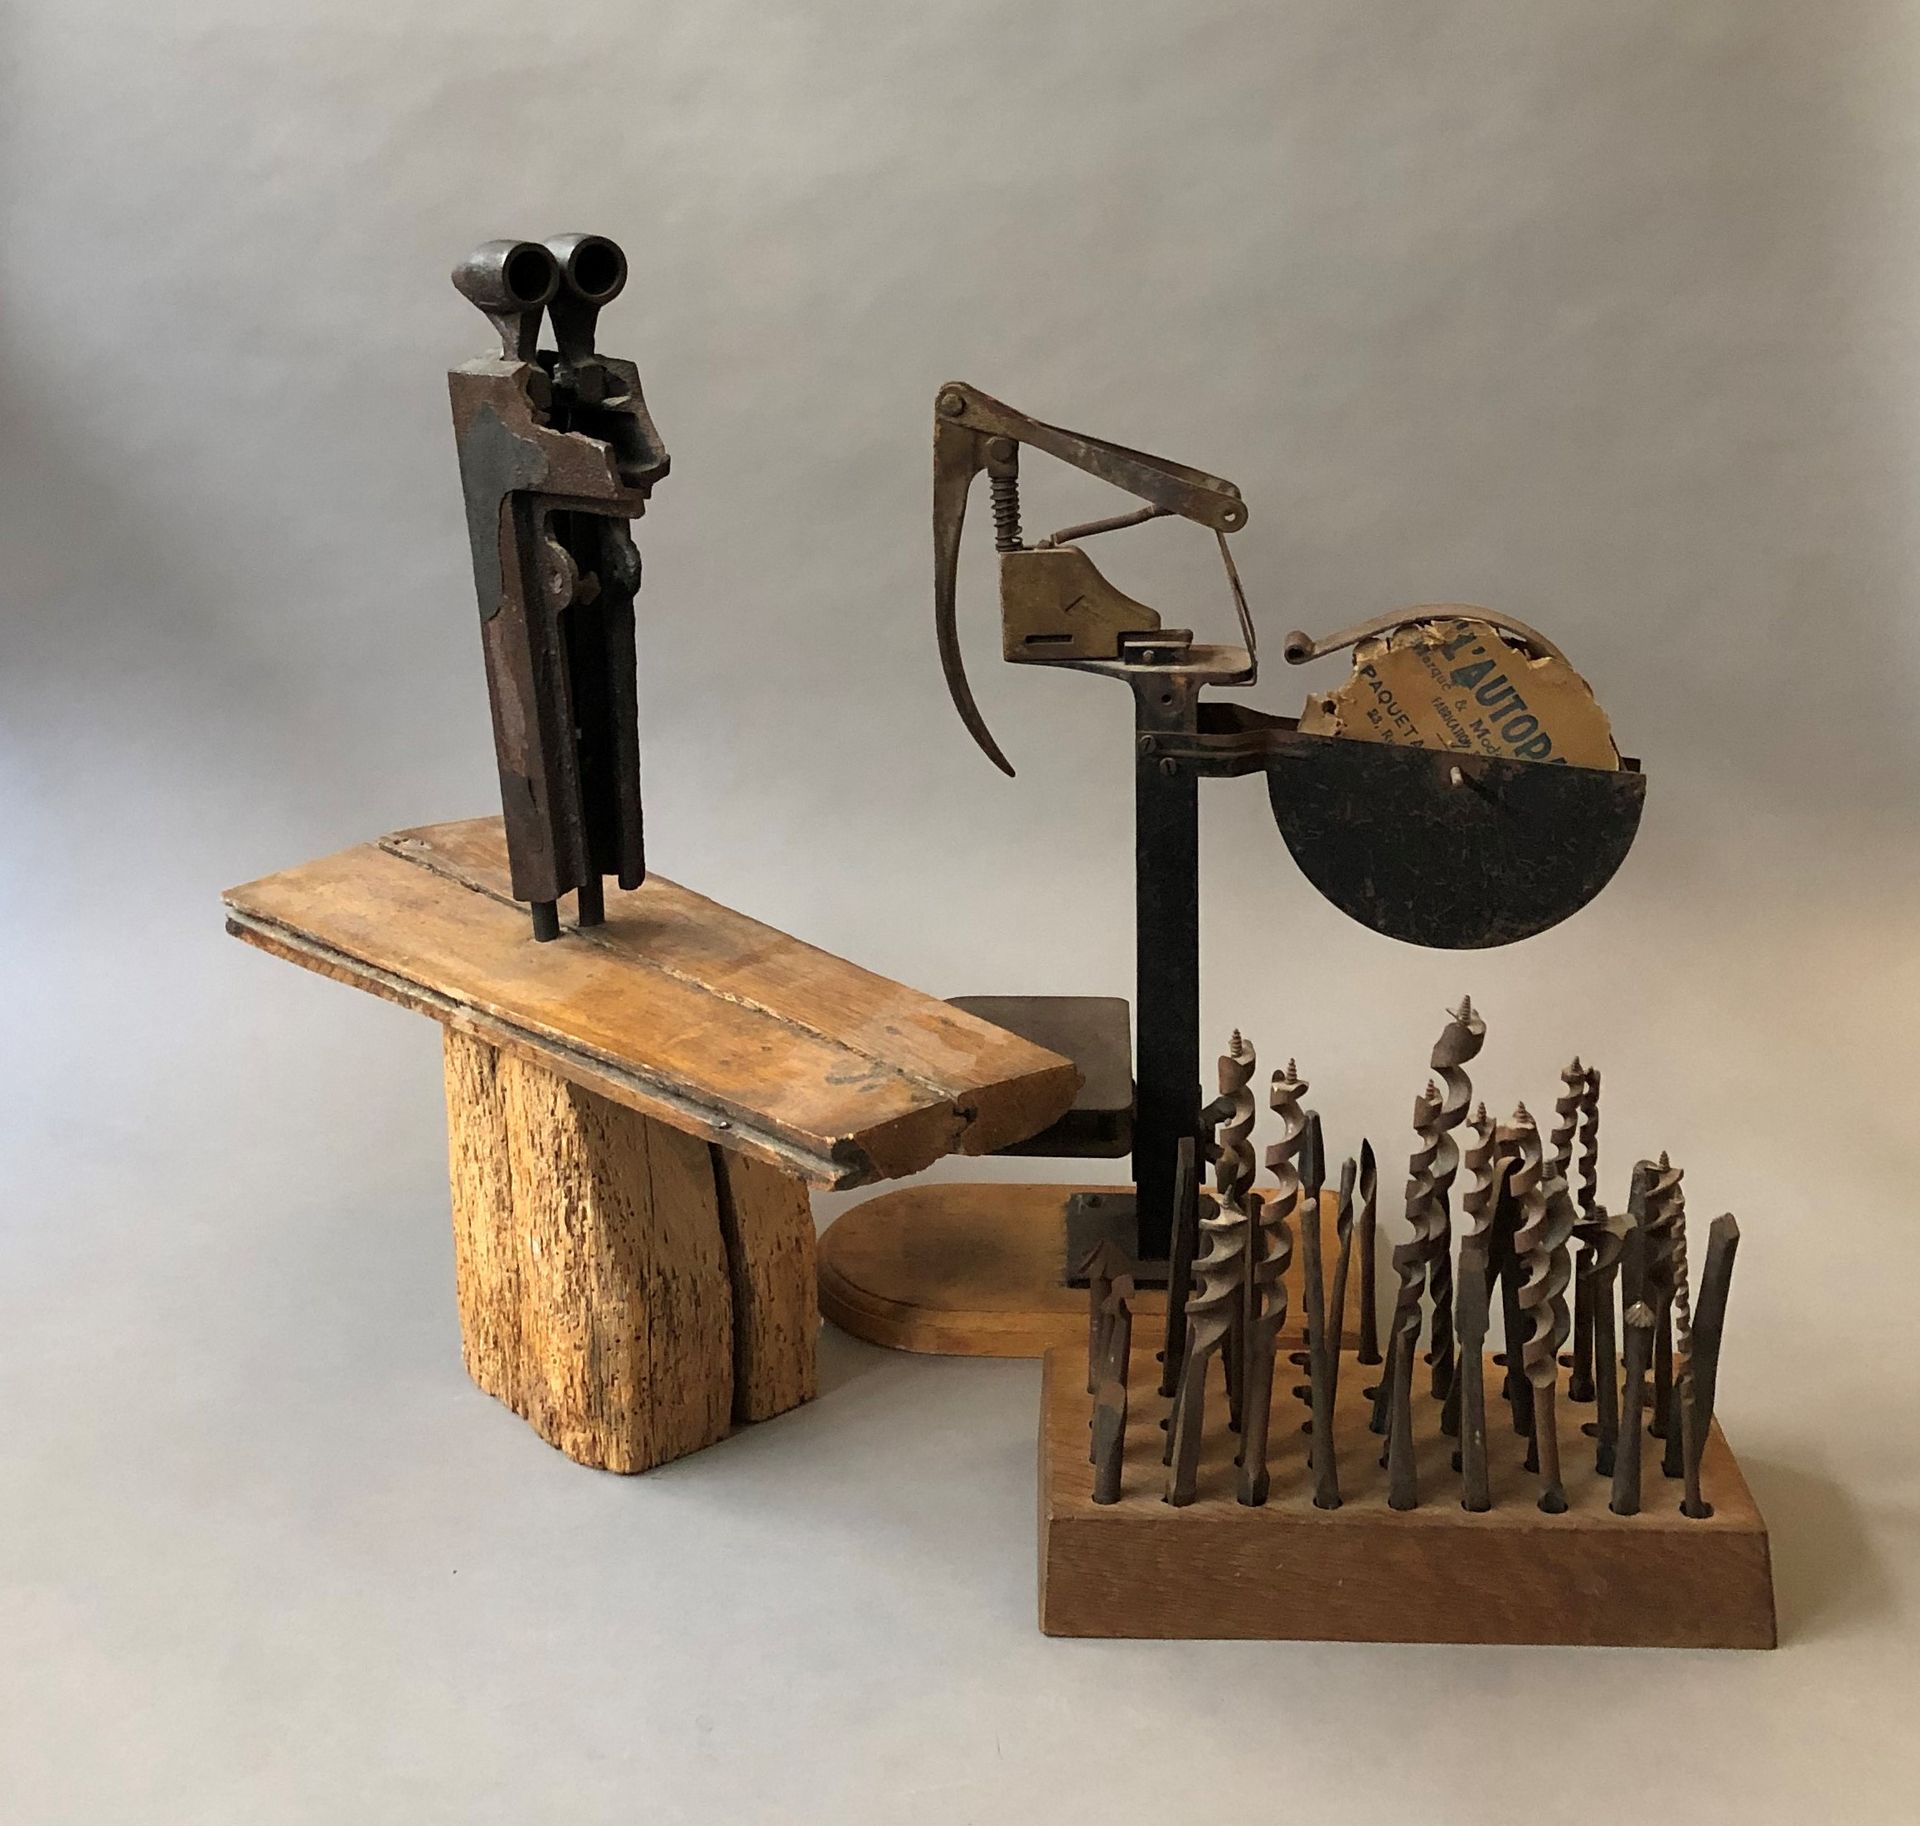 Null Jacques LIMOUSIN (20世纪)

无题

金属和木质雕塑。

H.56厘米

在木质底座上有第二个金属和纸板的雕塑，并附有一组灯芯